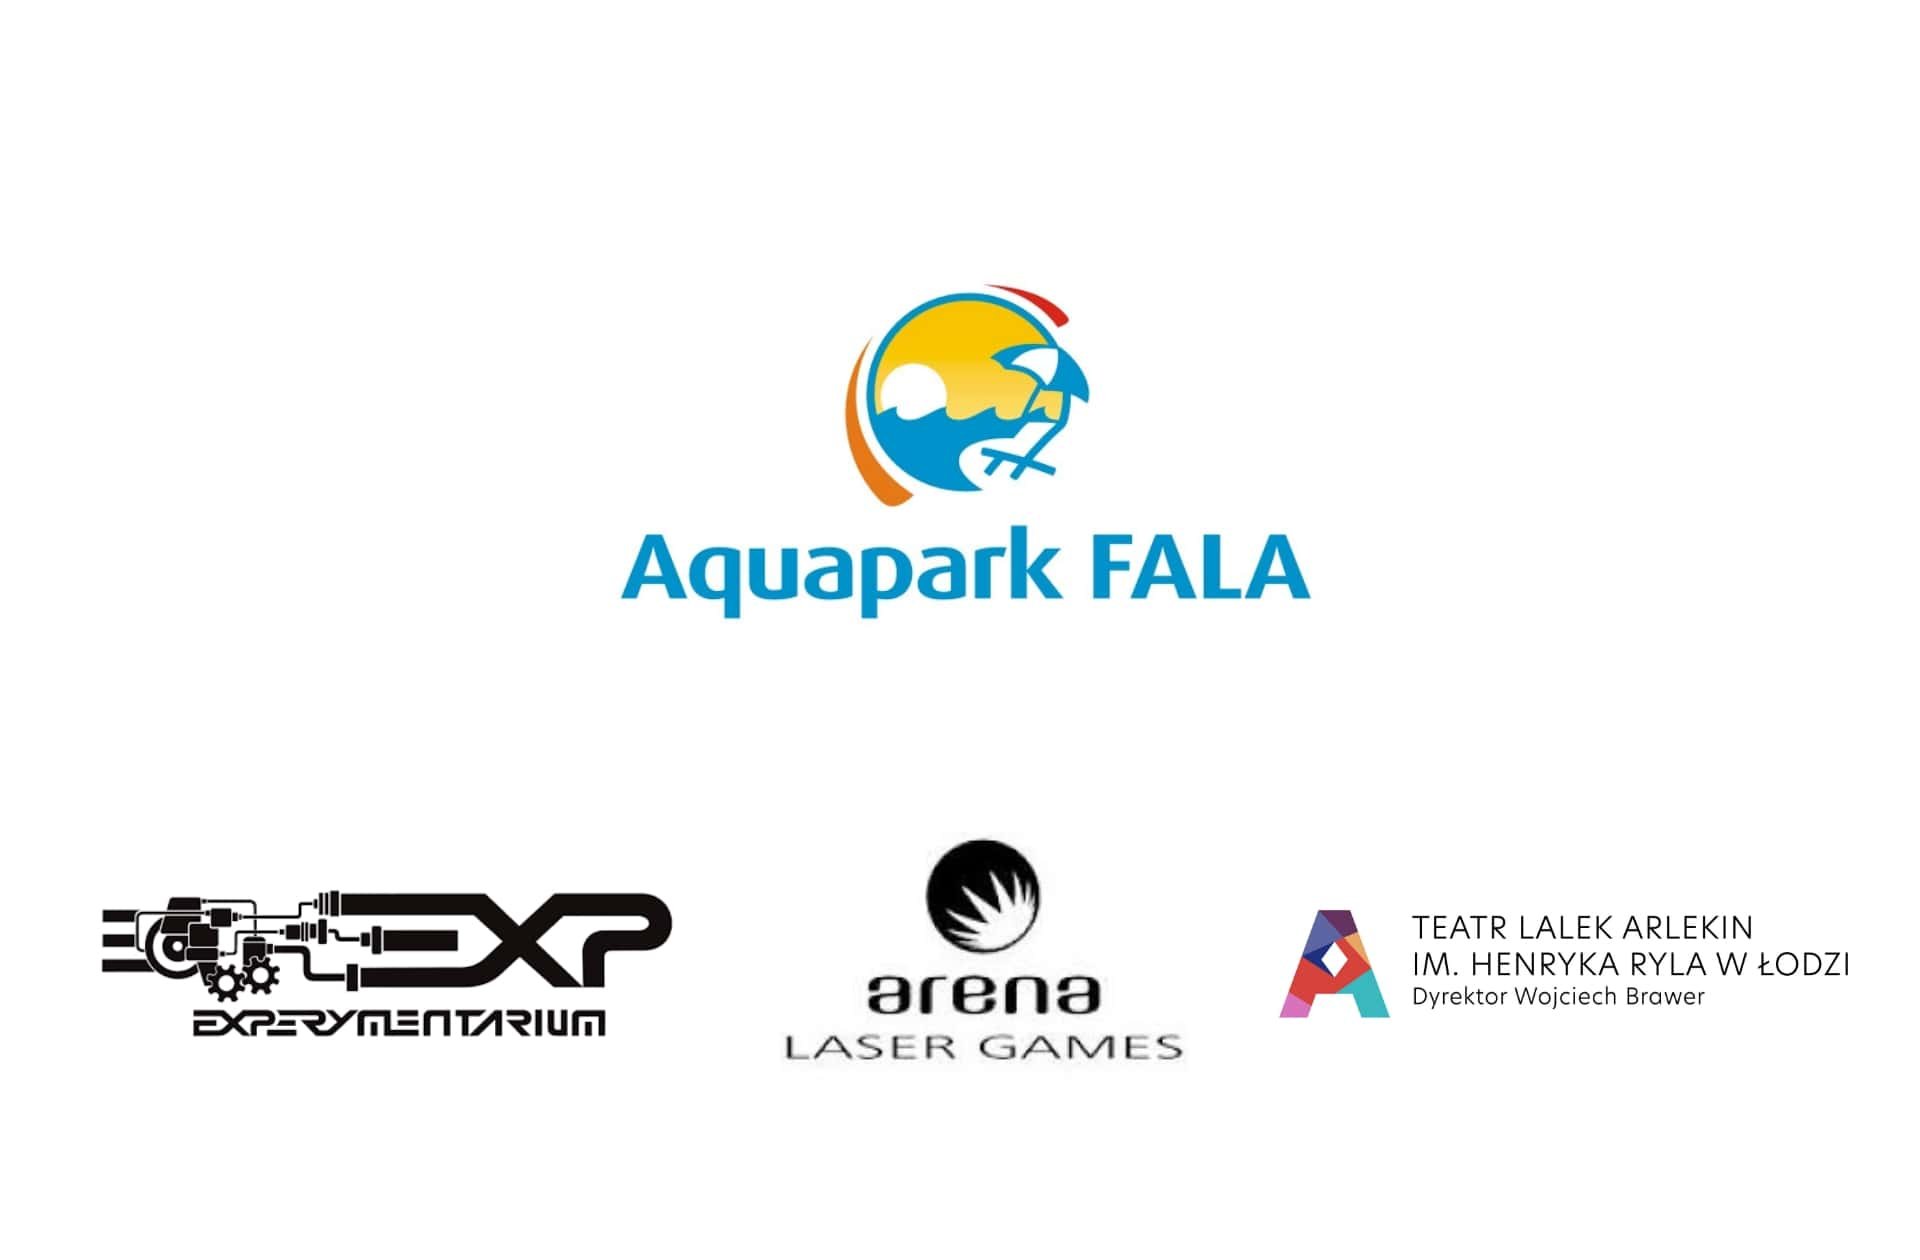 Logotypy: Aquapark FALA, Experymentarium, Arena Laser Games, Teatr Lalek Arlekin. 